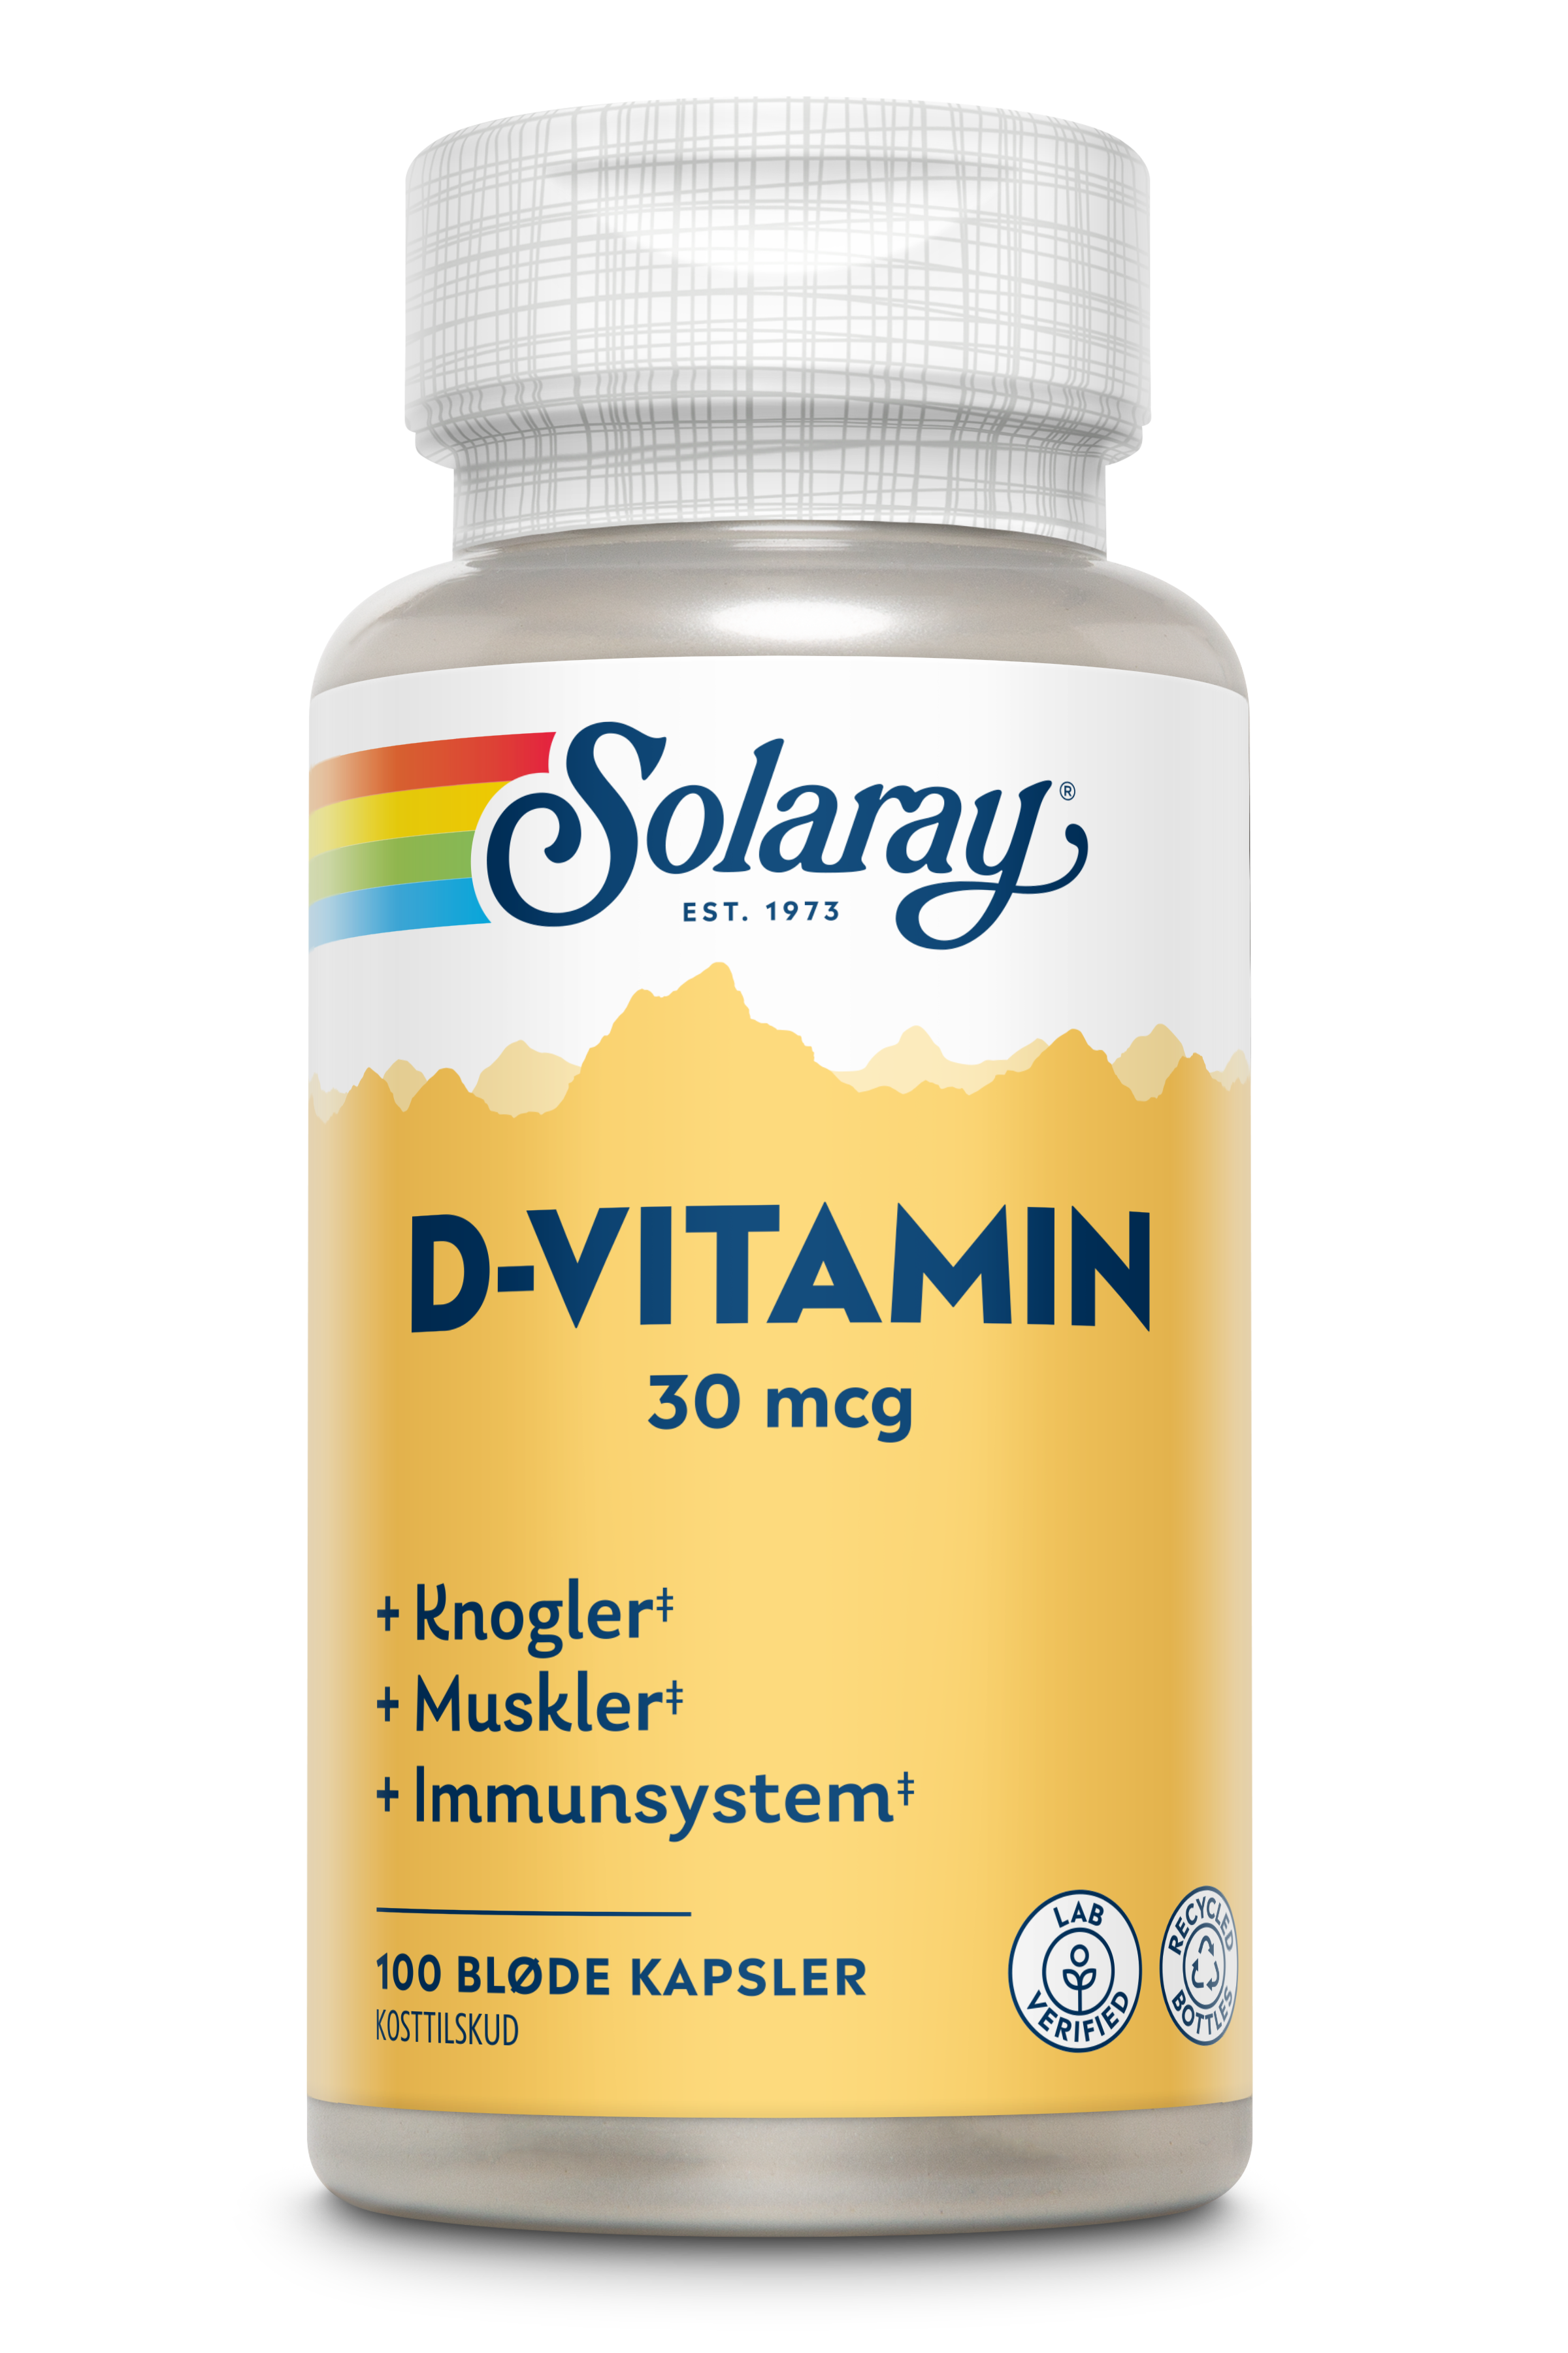 D-vitamin 30 mcg produktfoto